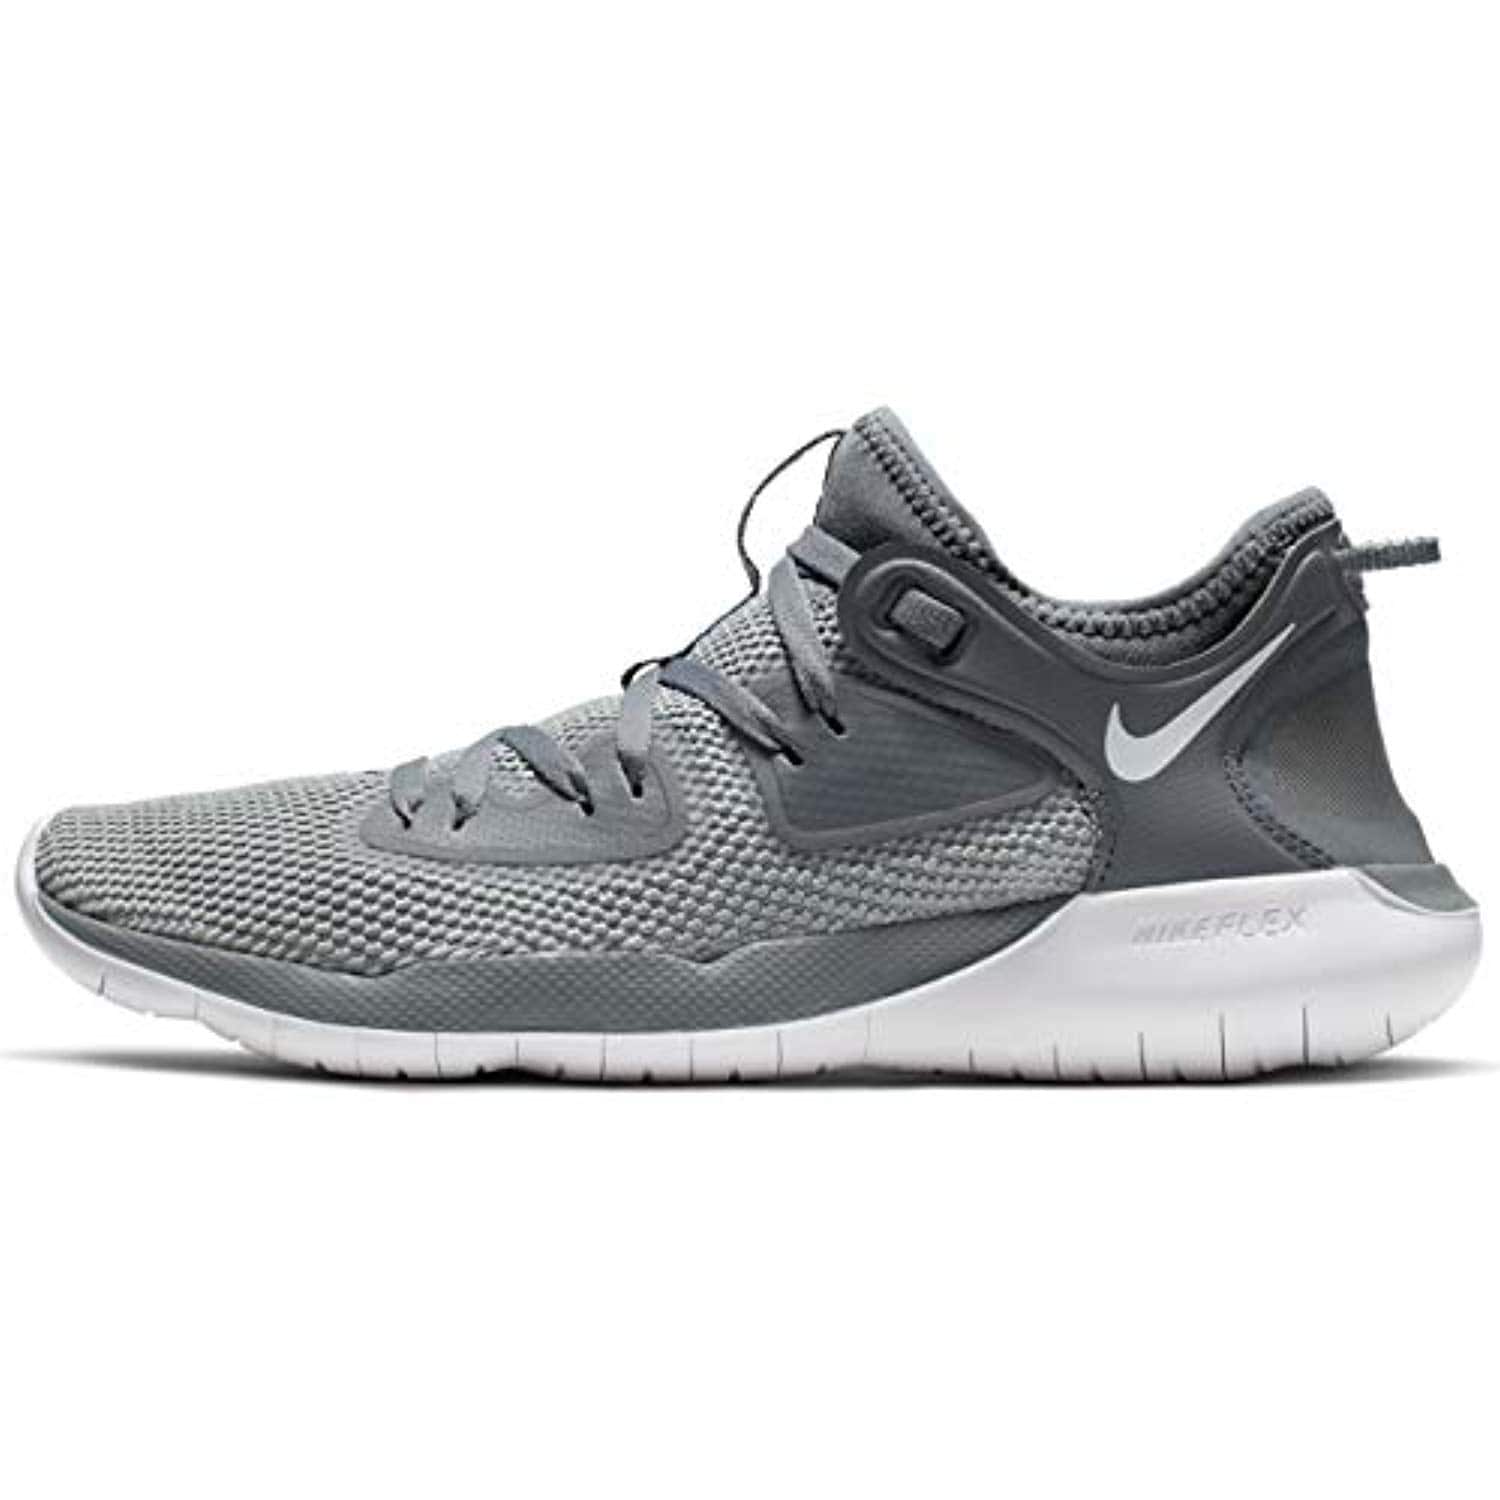 Flex 2019 Rn Running Shoe Cool Grey 